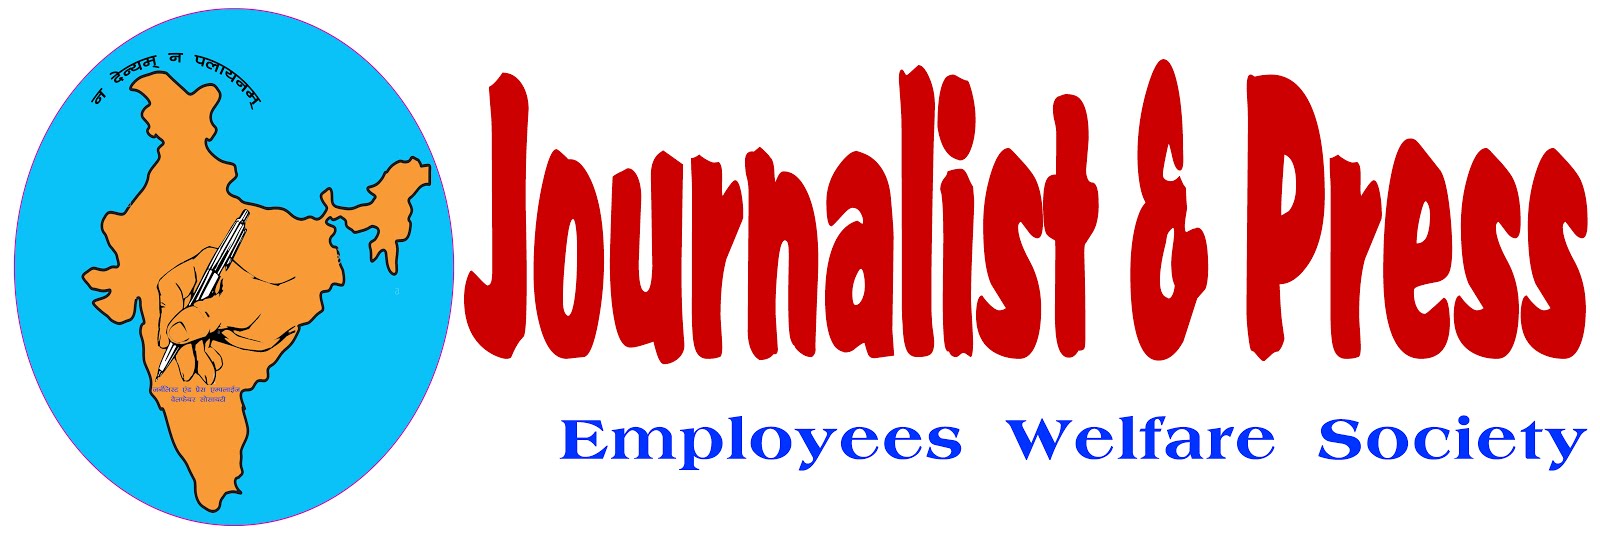 Journalist &amp; Press Employees Welfare Society 